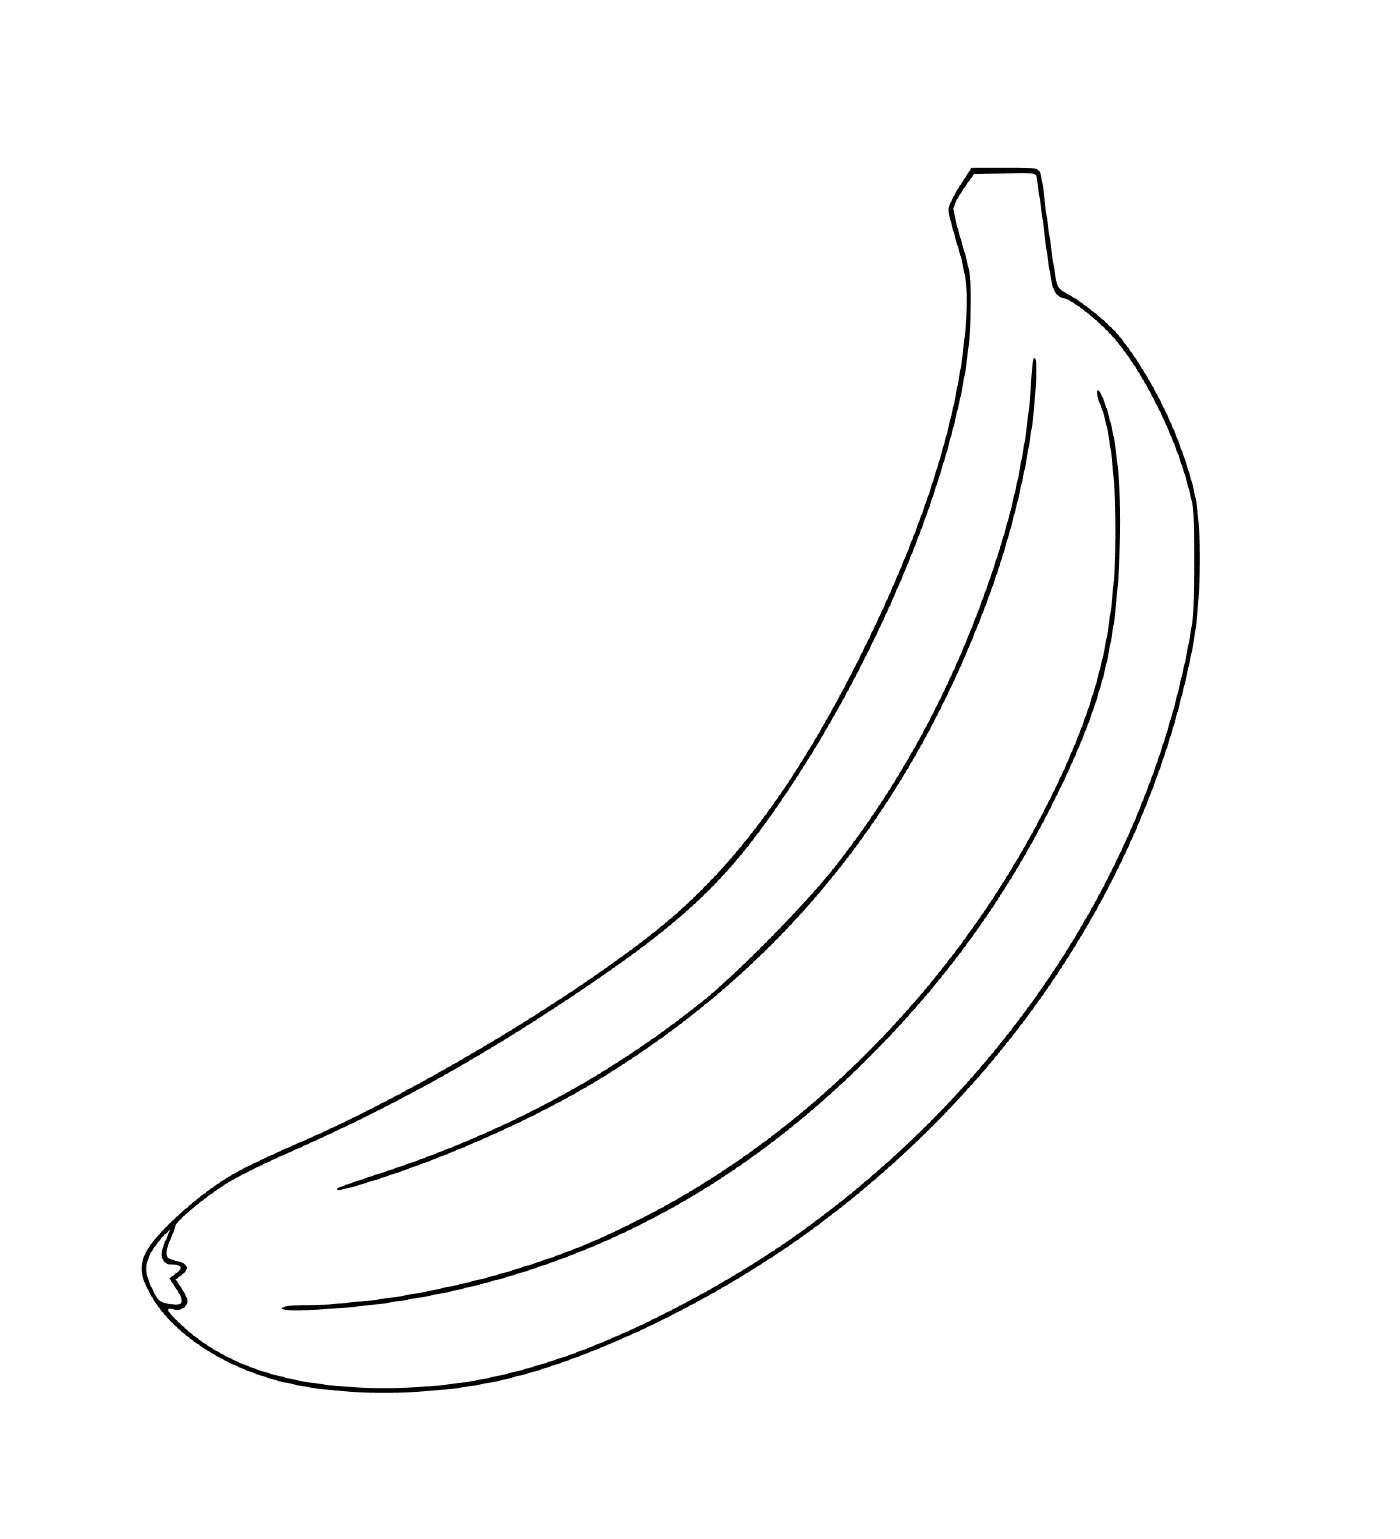  Plátano amarillo sabroso 